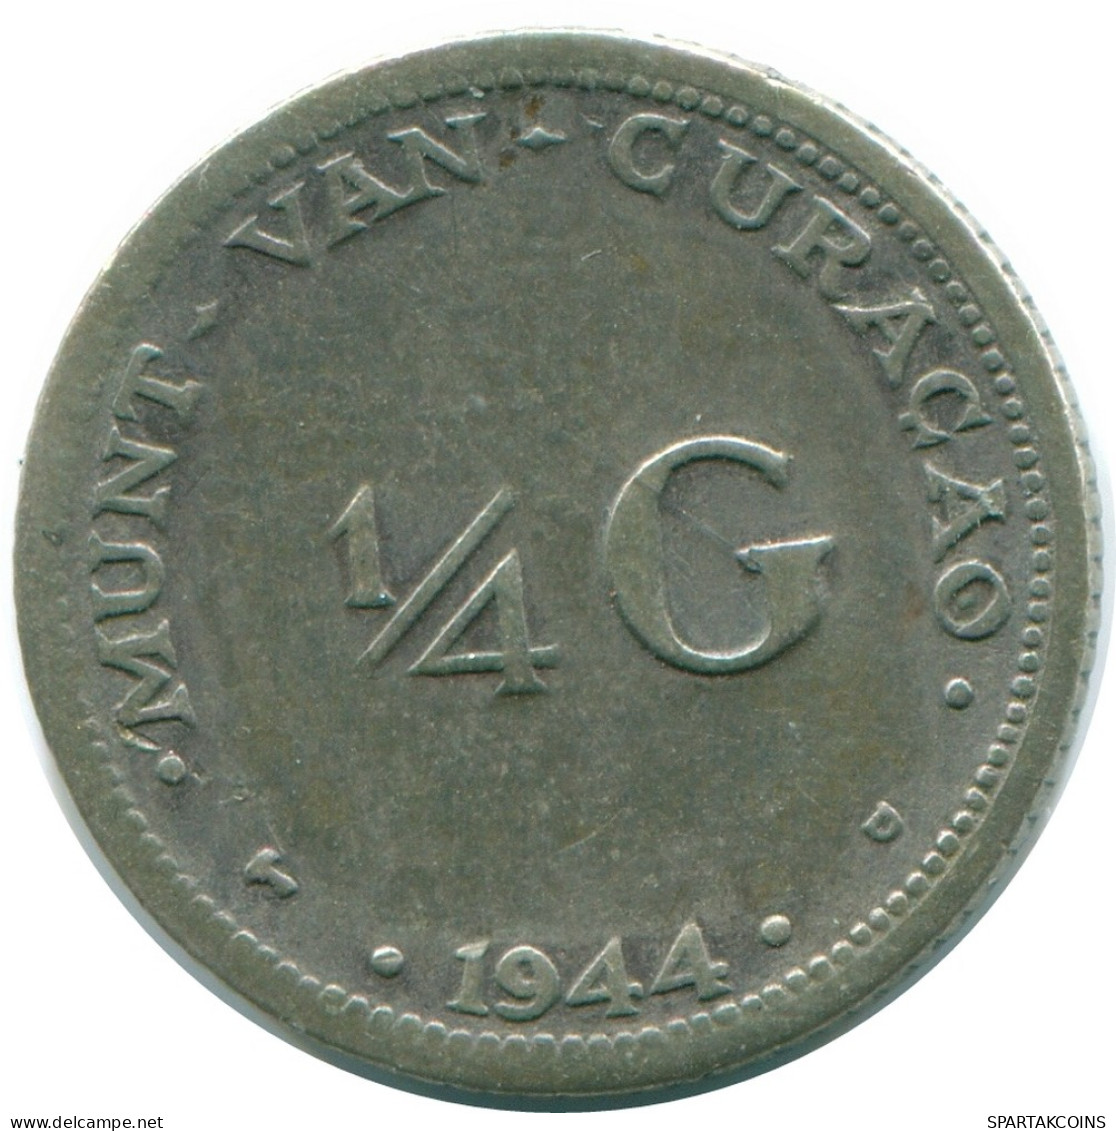 1/4 GULDEN 1944 CURACAO Netherlands SILVER Colonial Coin #NL10608.4.U - Curaçao